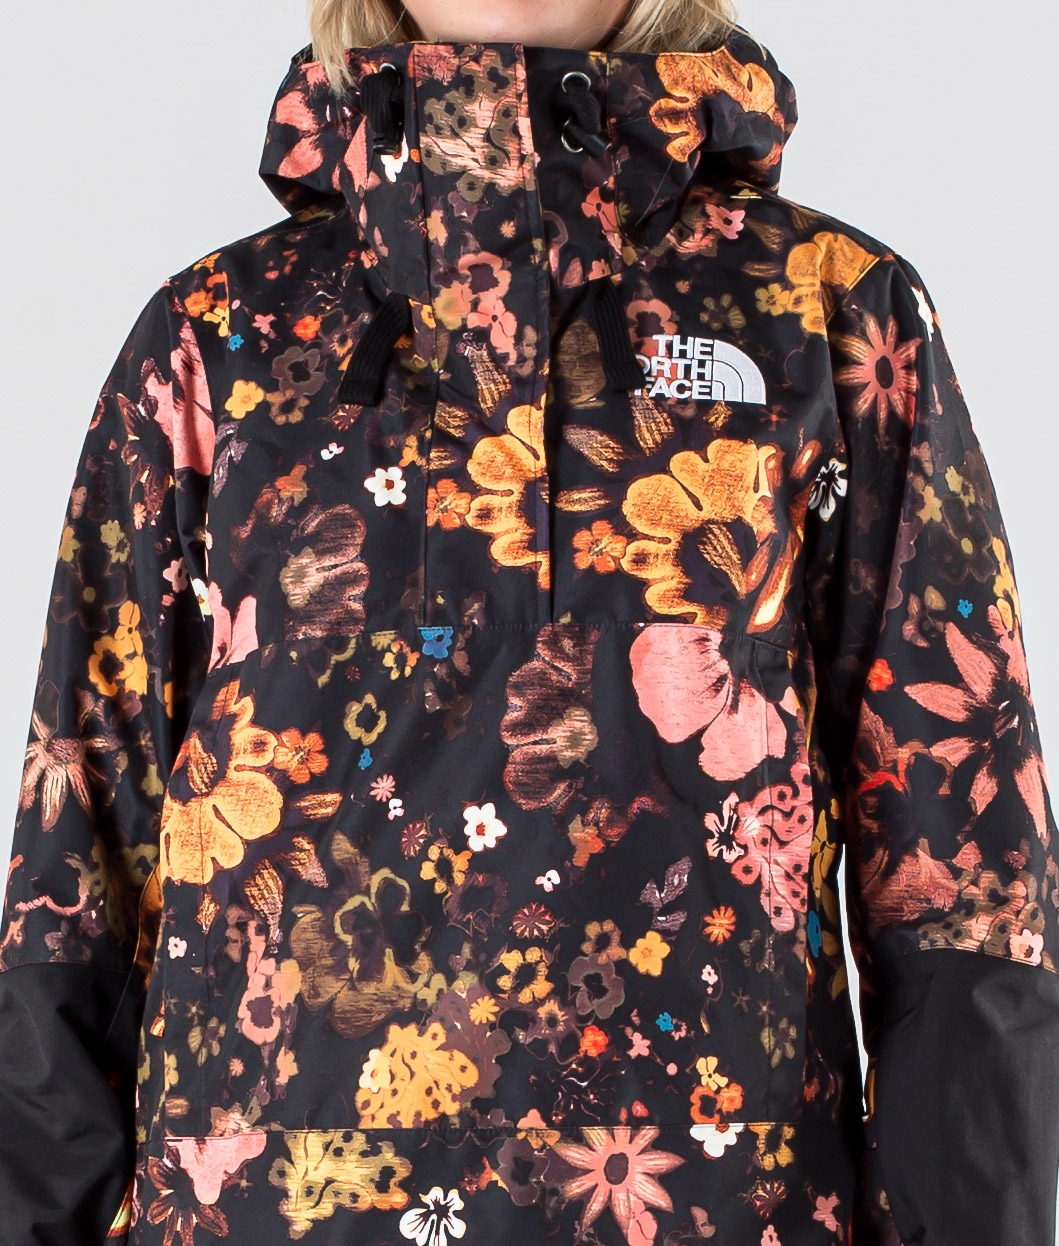 north face flower jacket